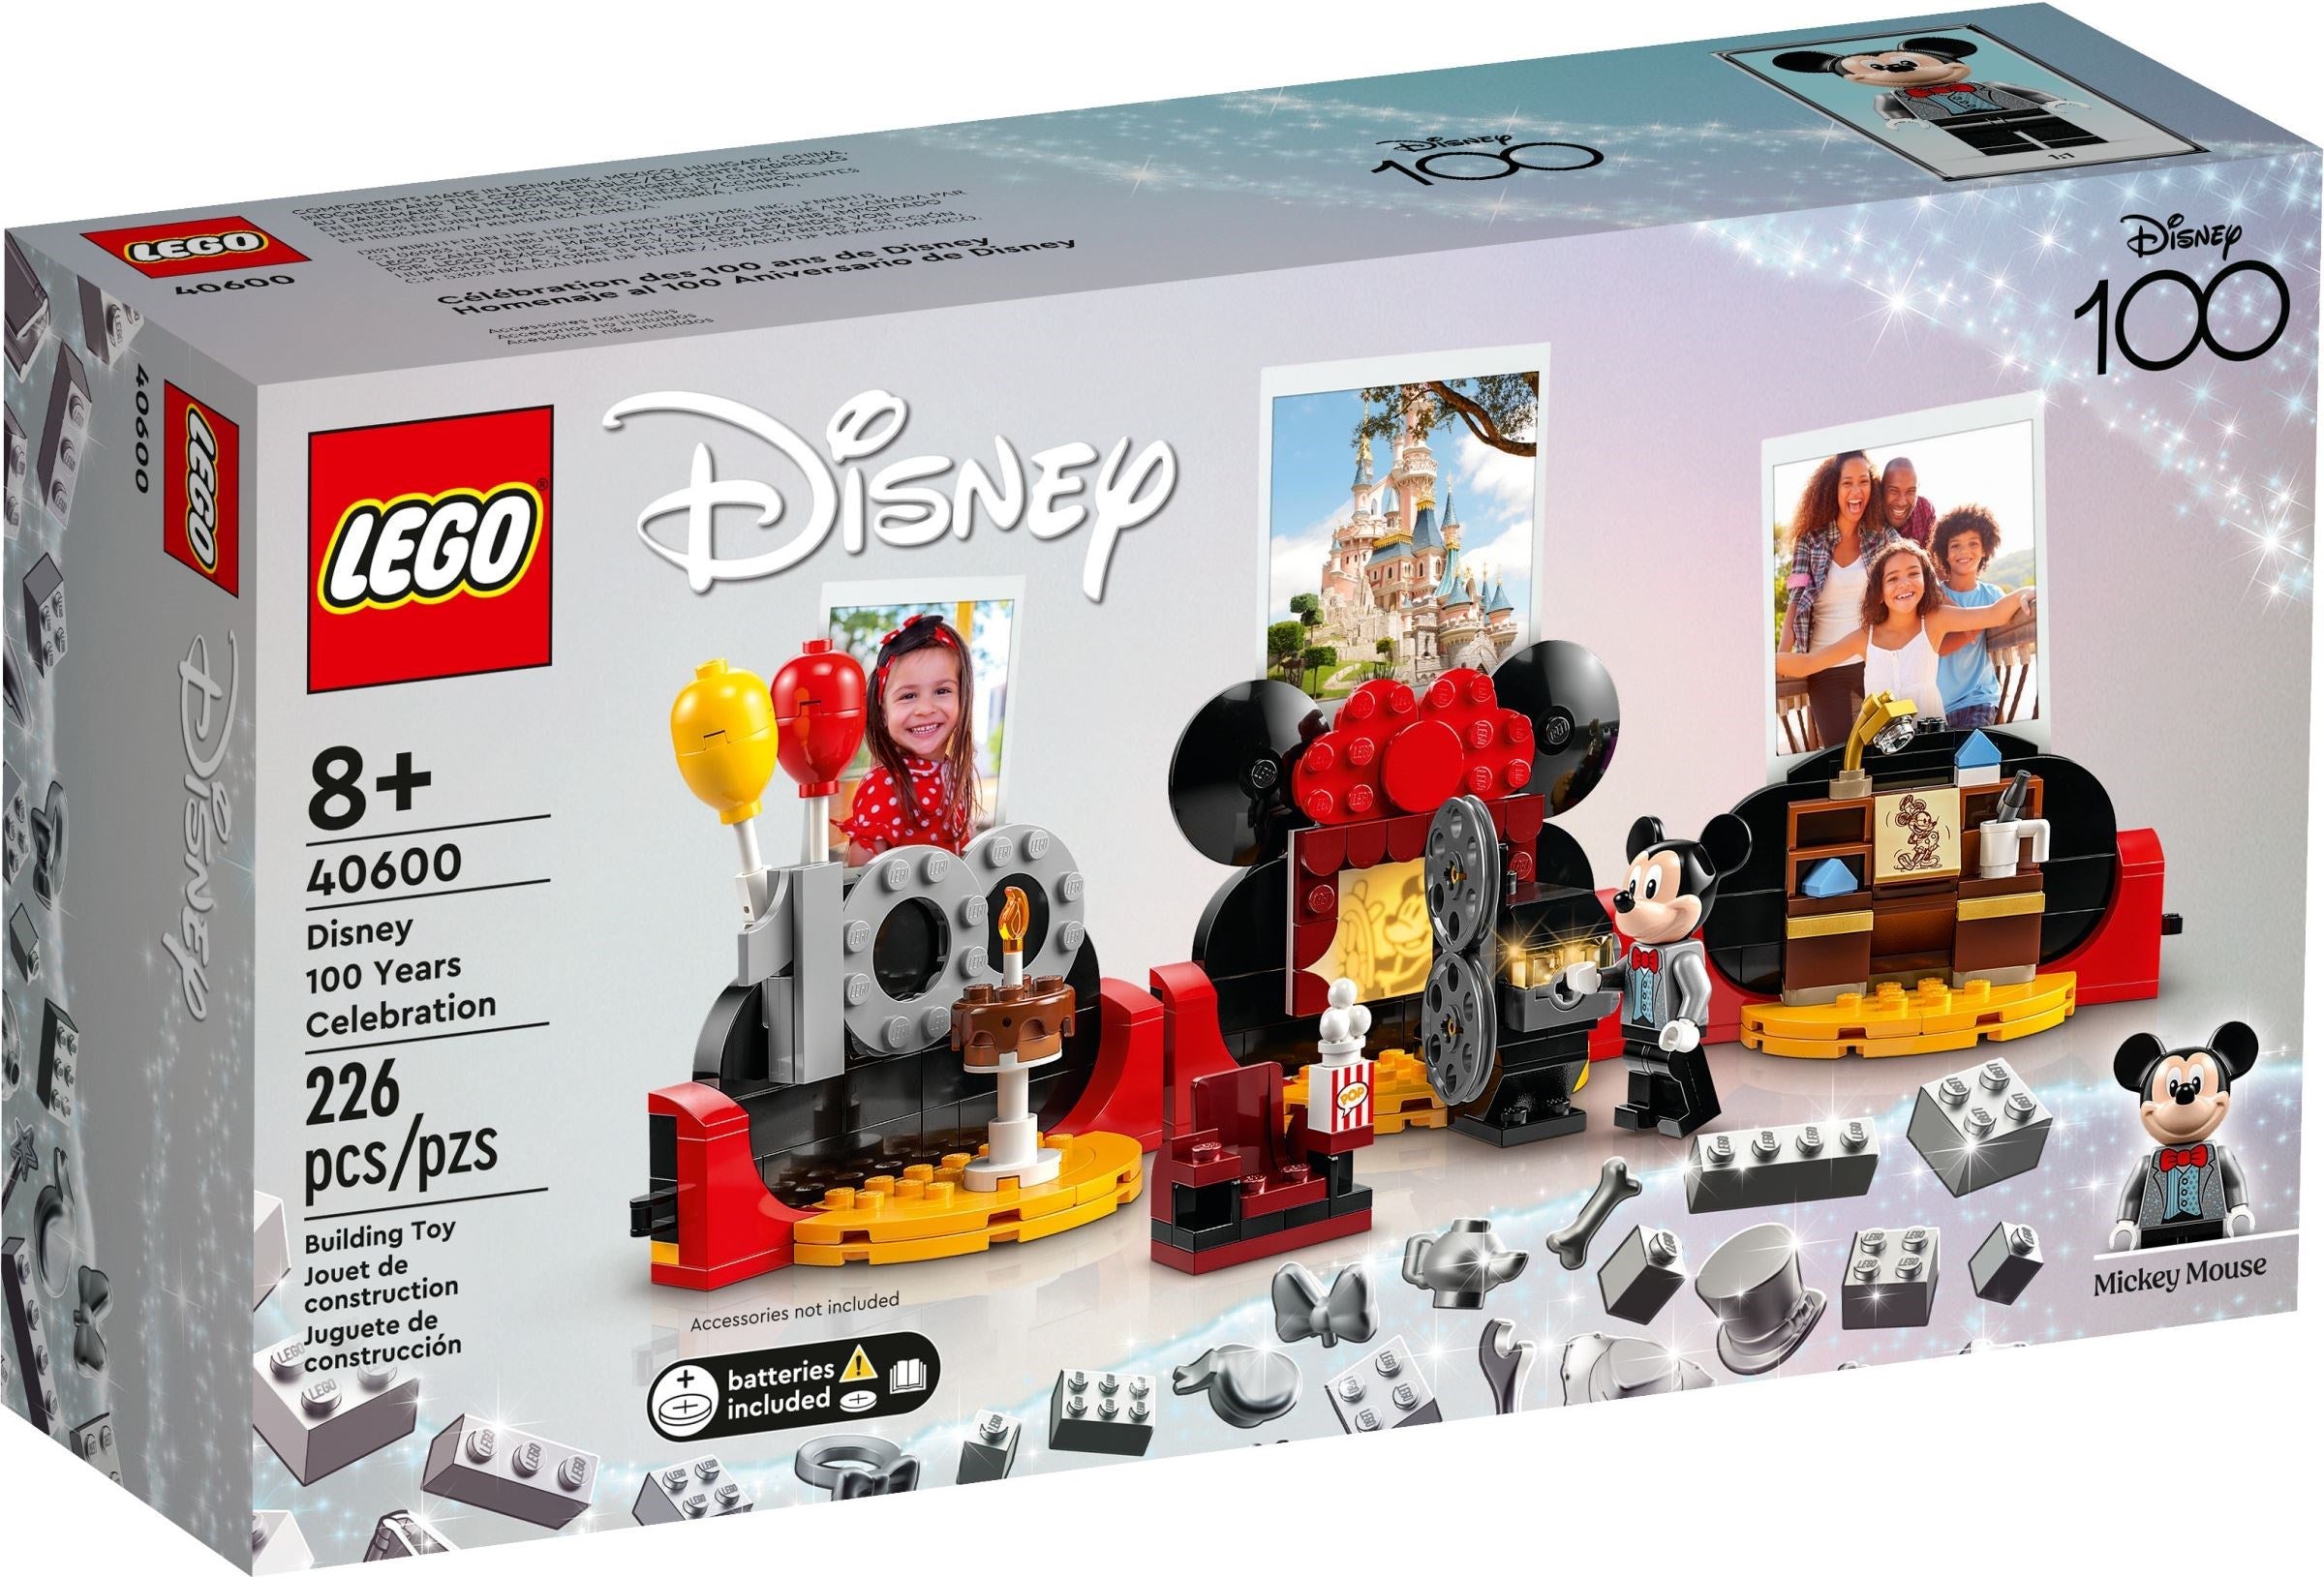 Lego Disney 40600 - Disney 100 Years Celebration